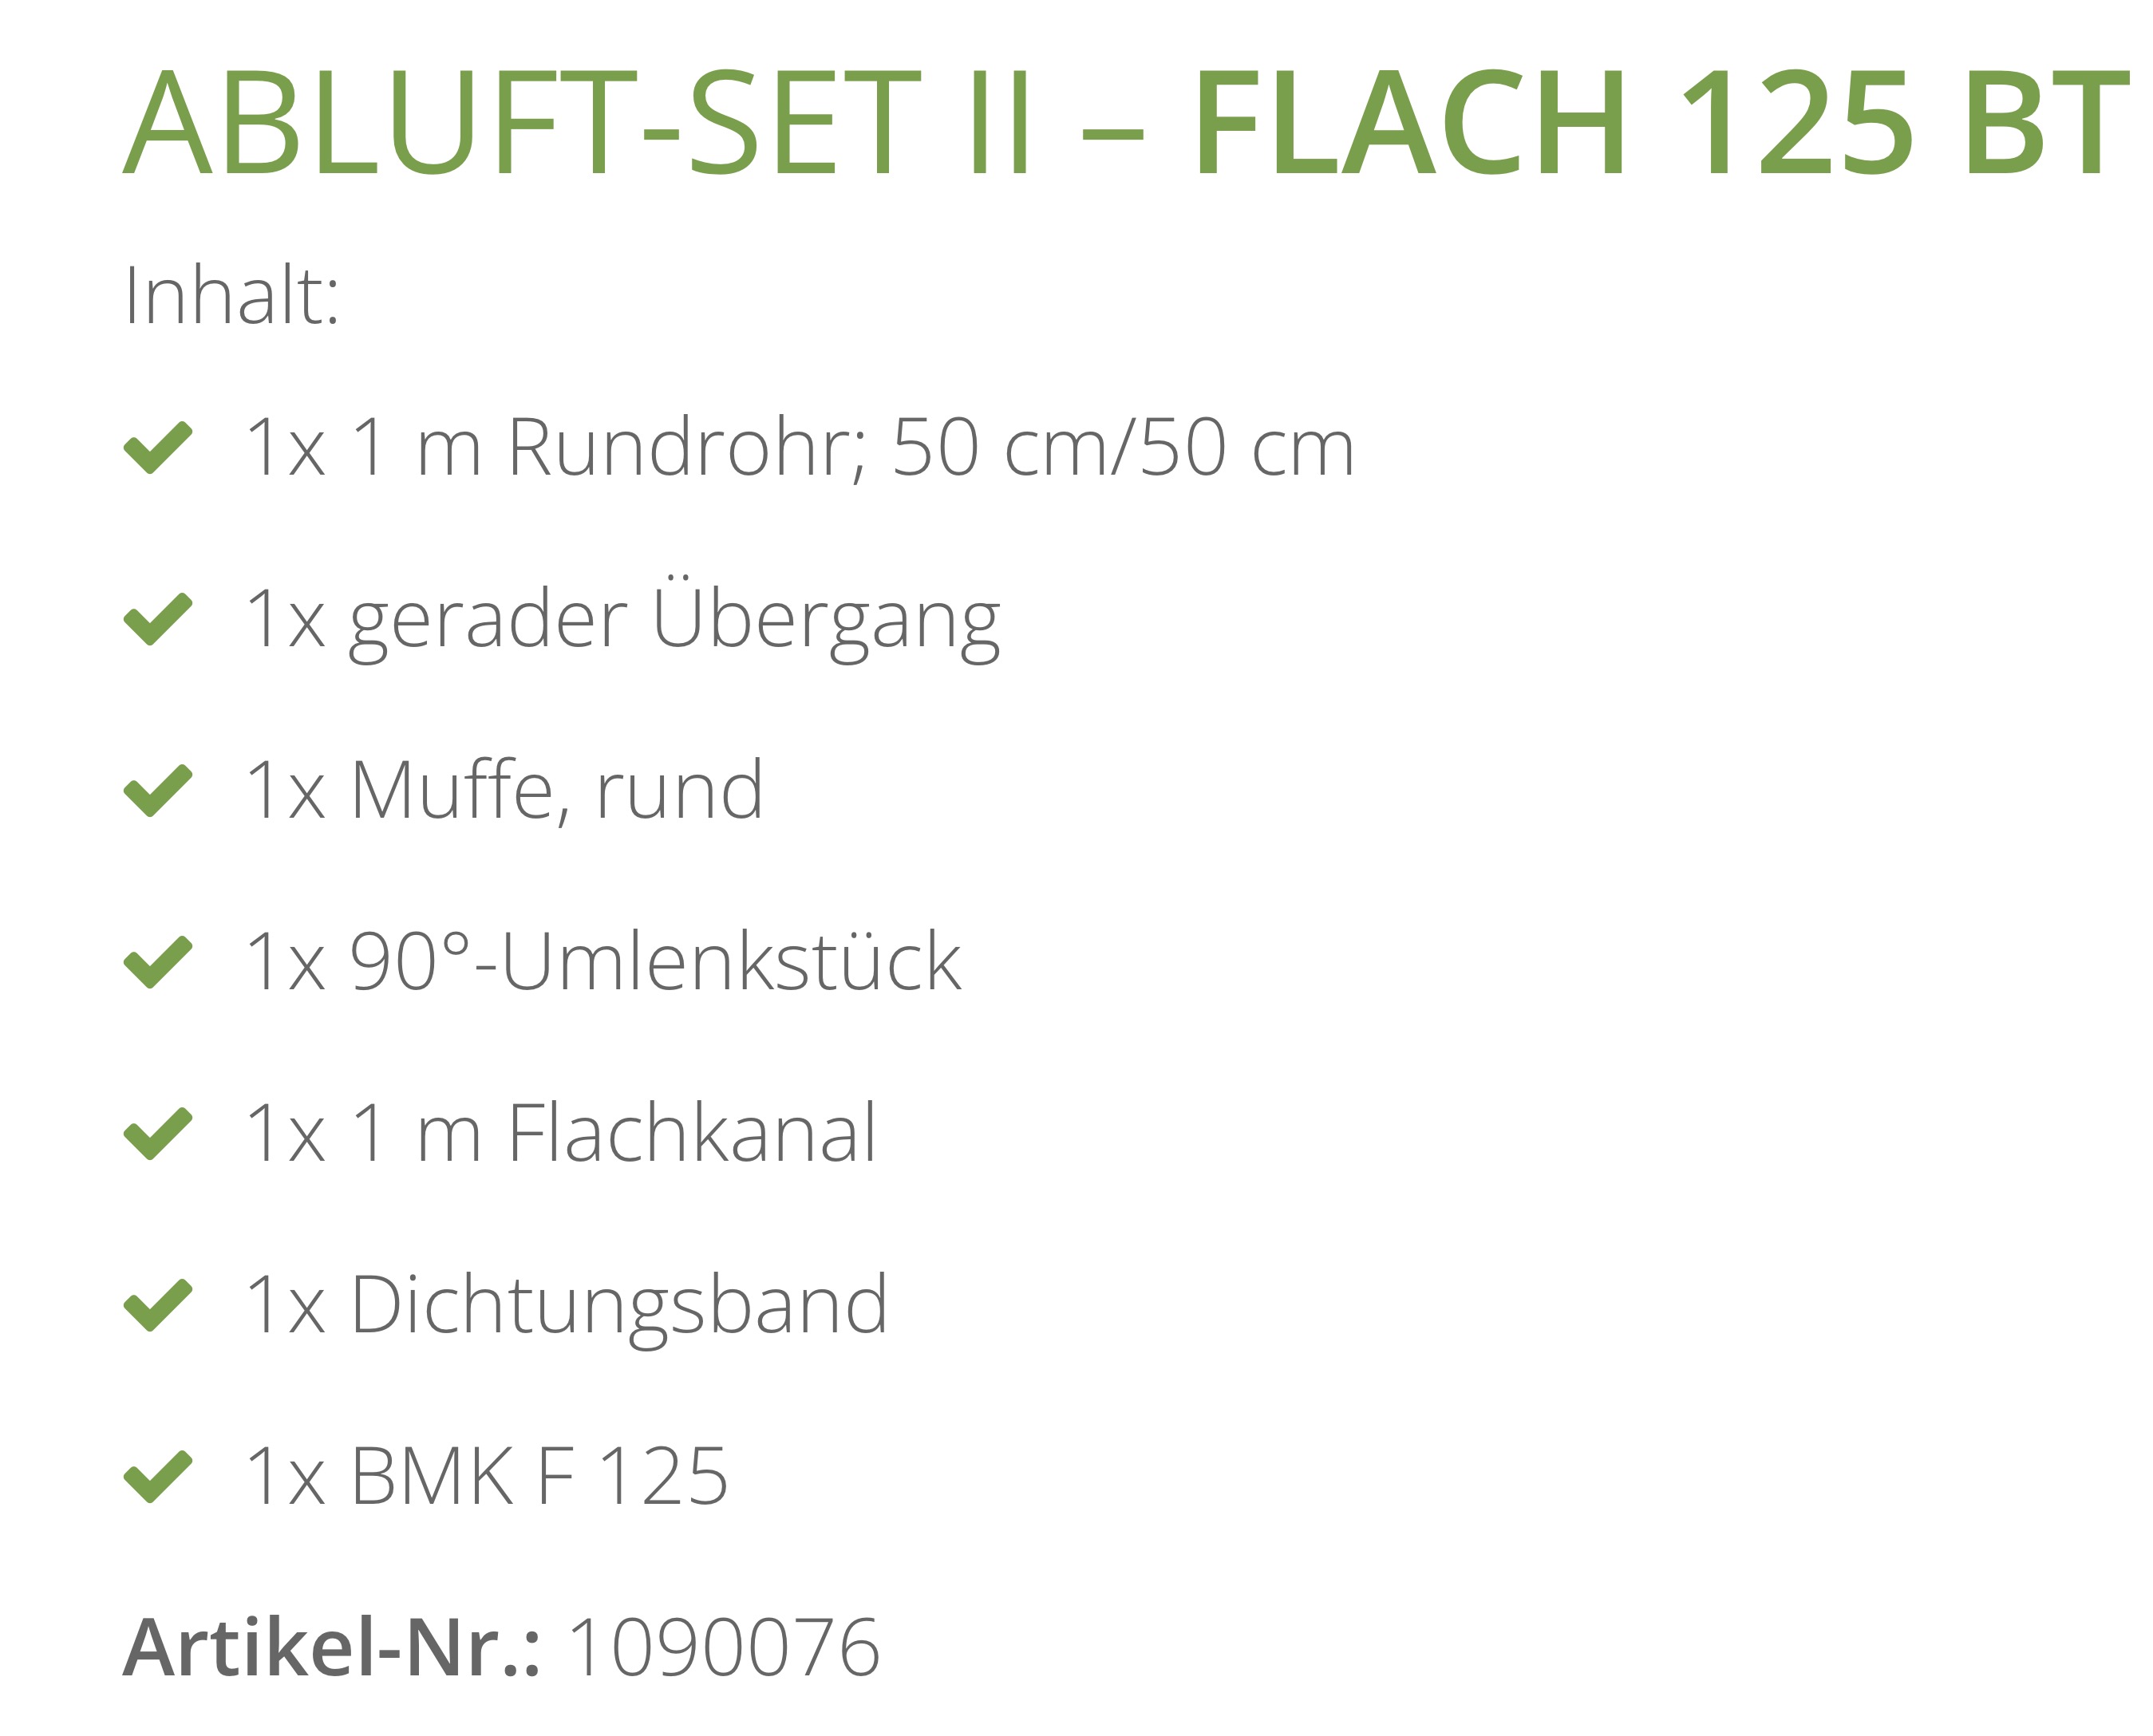 Berbel Abluft-Set II Flach 125 bT 1090076